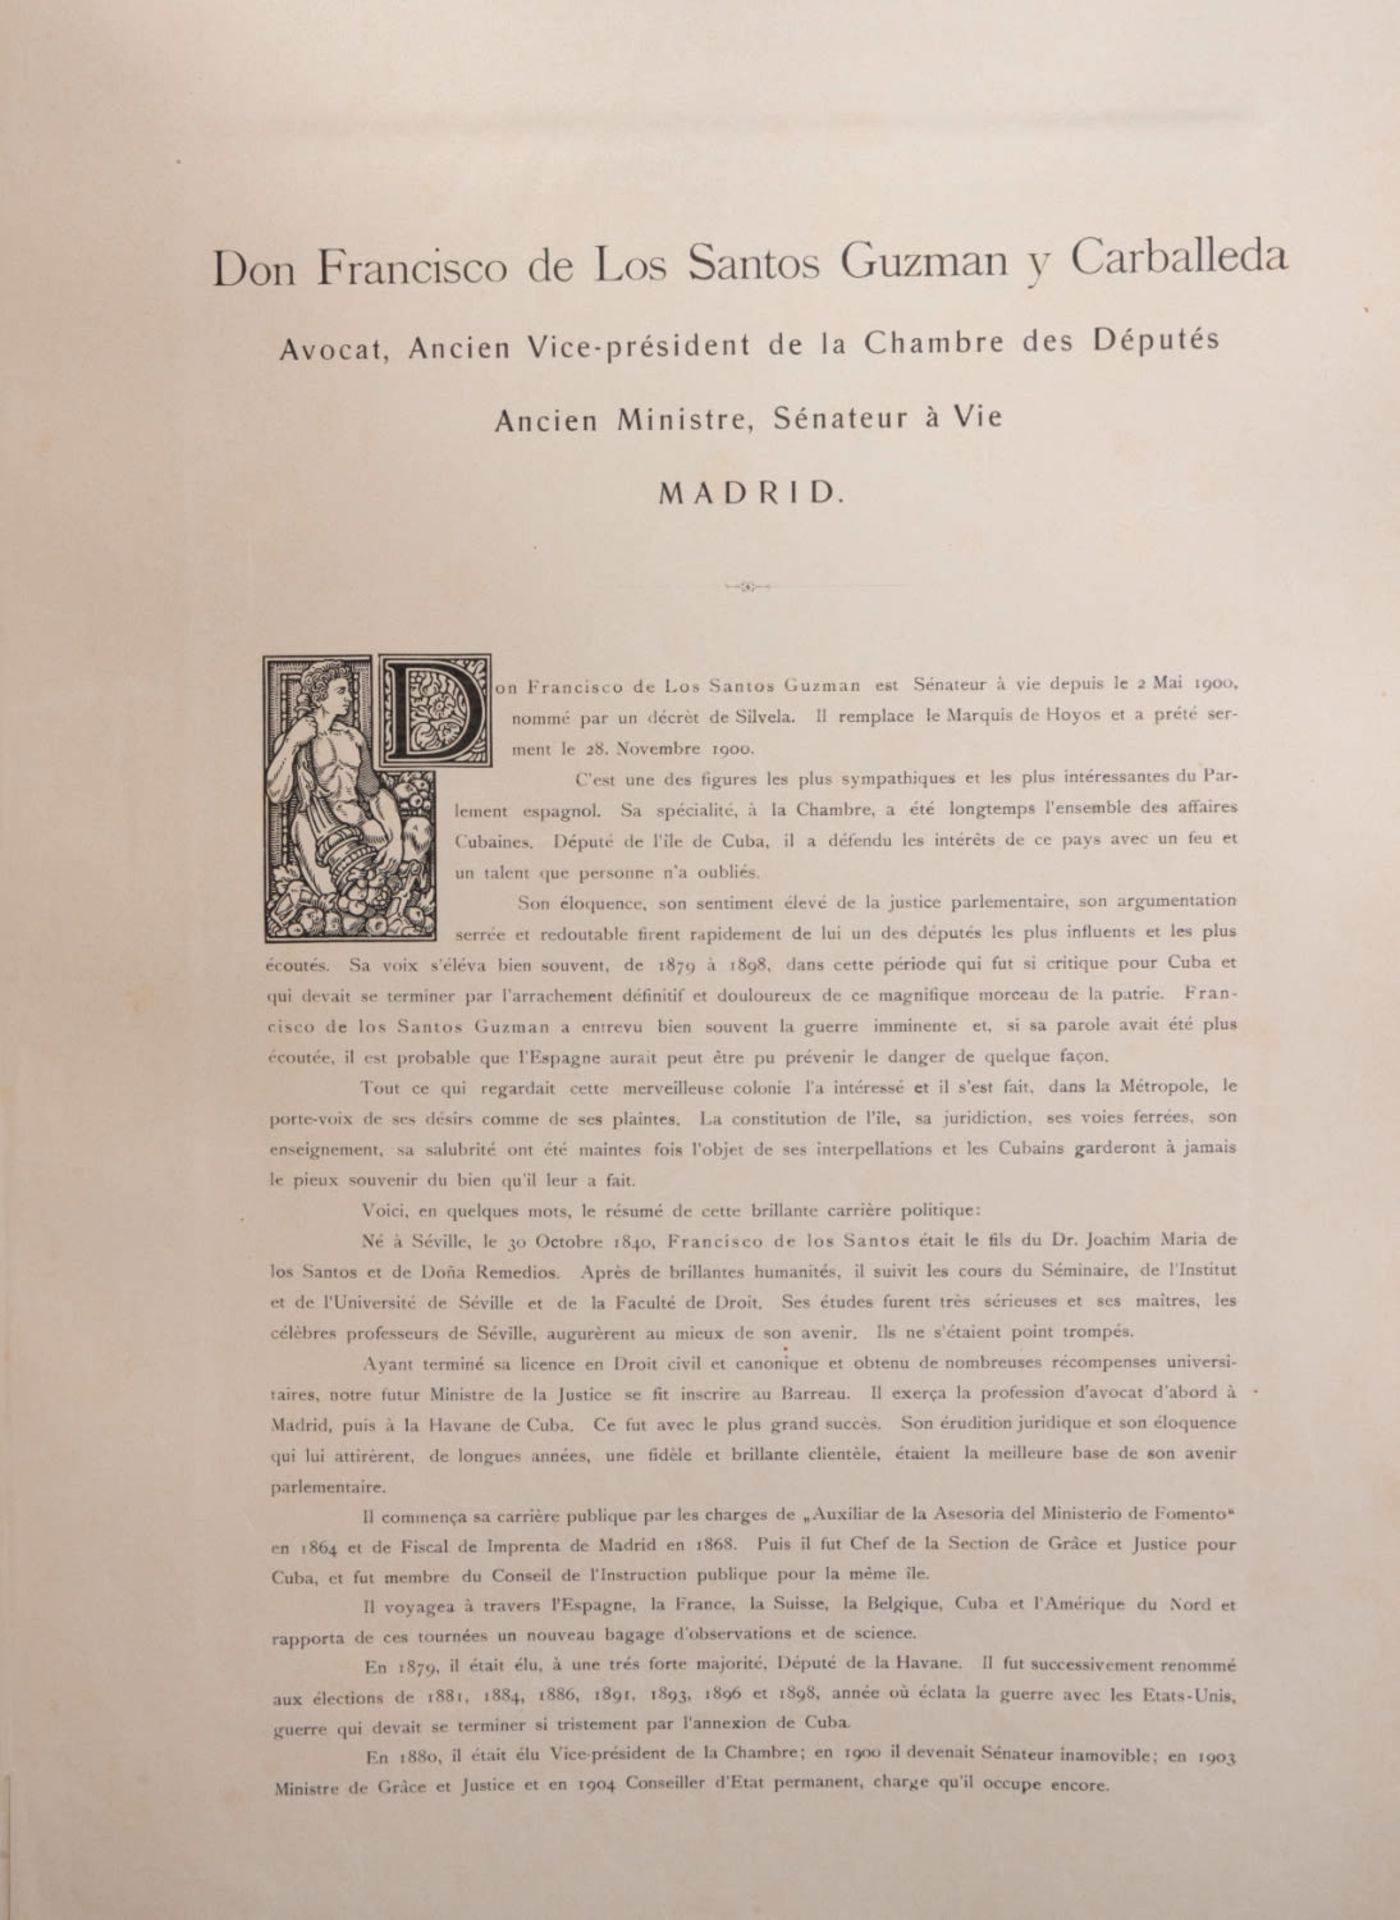 Book "l'Espagne Contemporaine", 19th century - Image 7 of 8